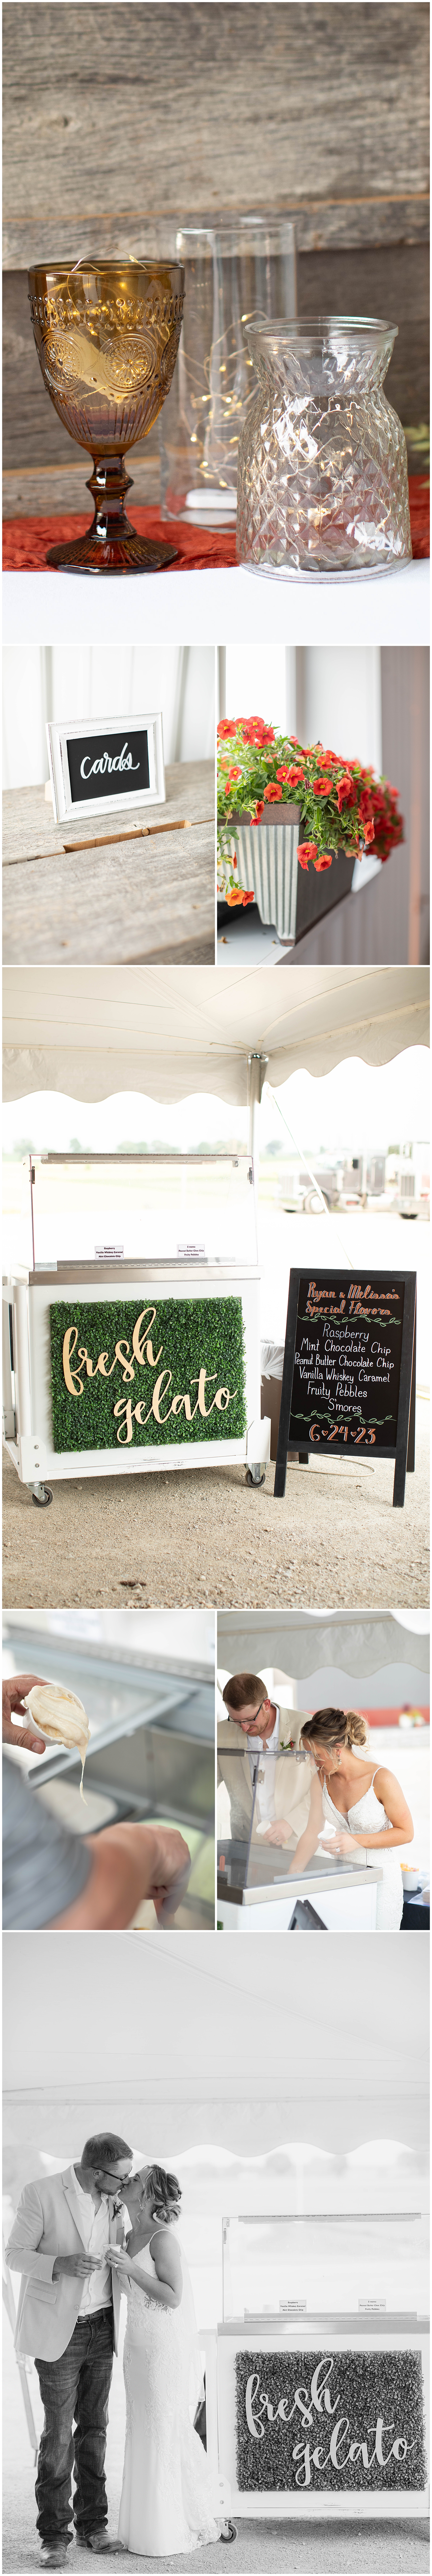 reception details with gelato cart